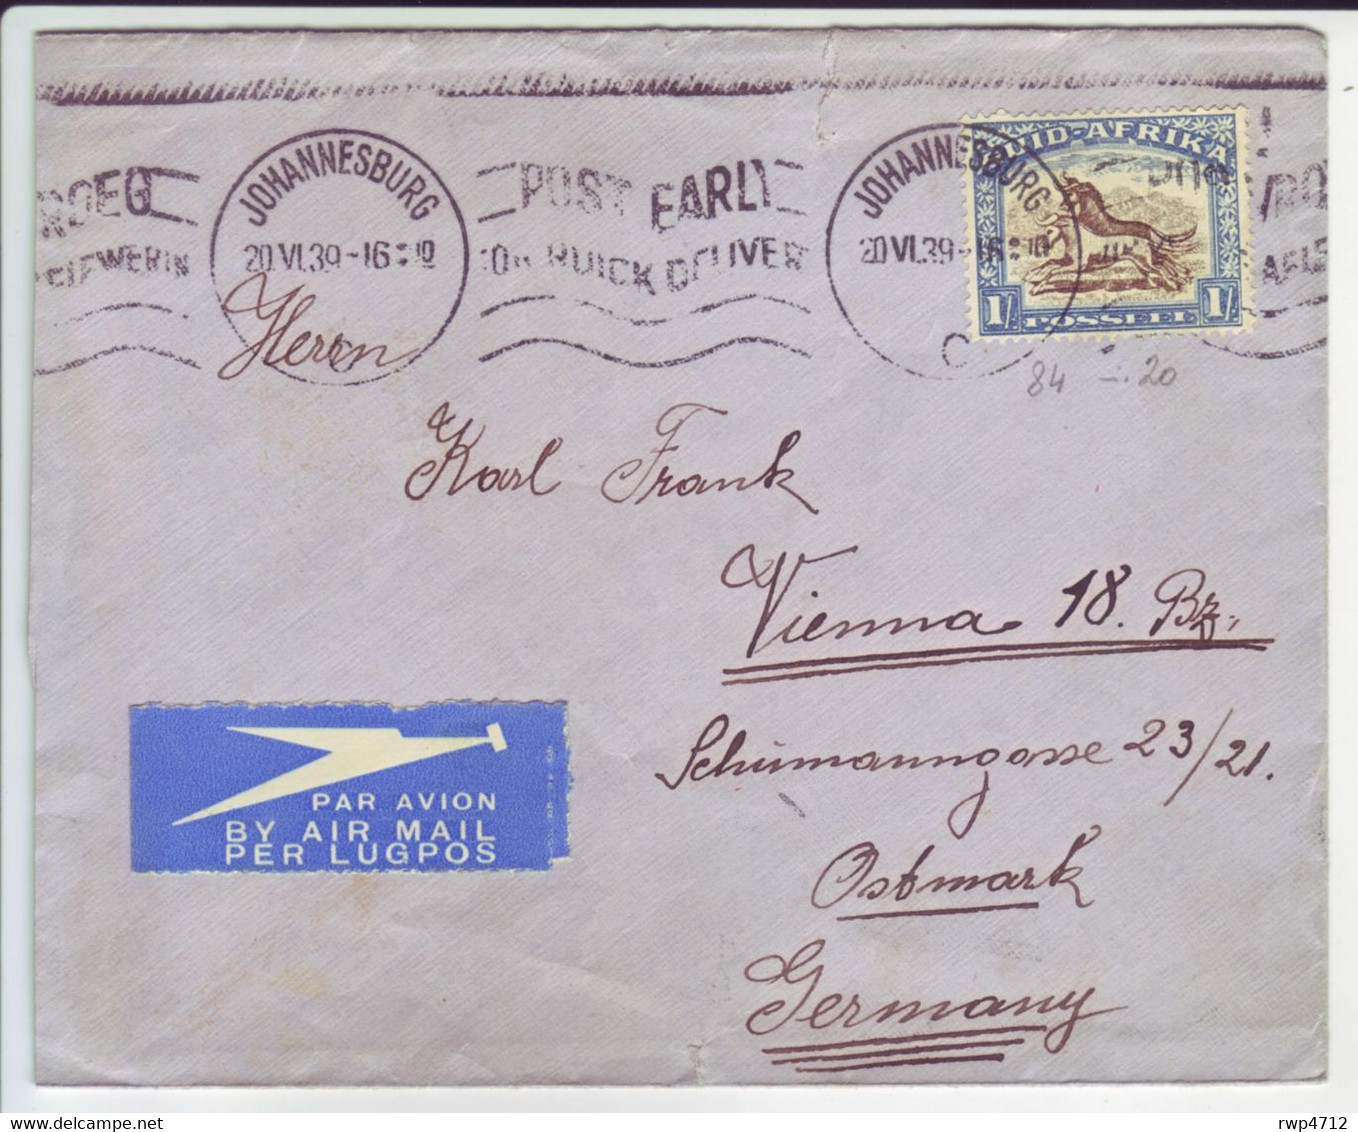 SOUTH AFRICA   Luftpostbrief  Airmail Cover Lettre Par Avion 1939 Via Athen To Austria - Luchtpost